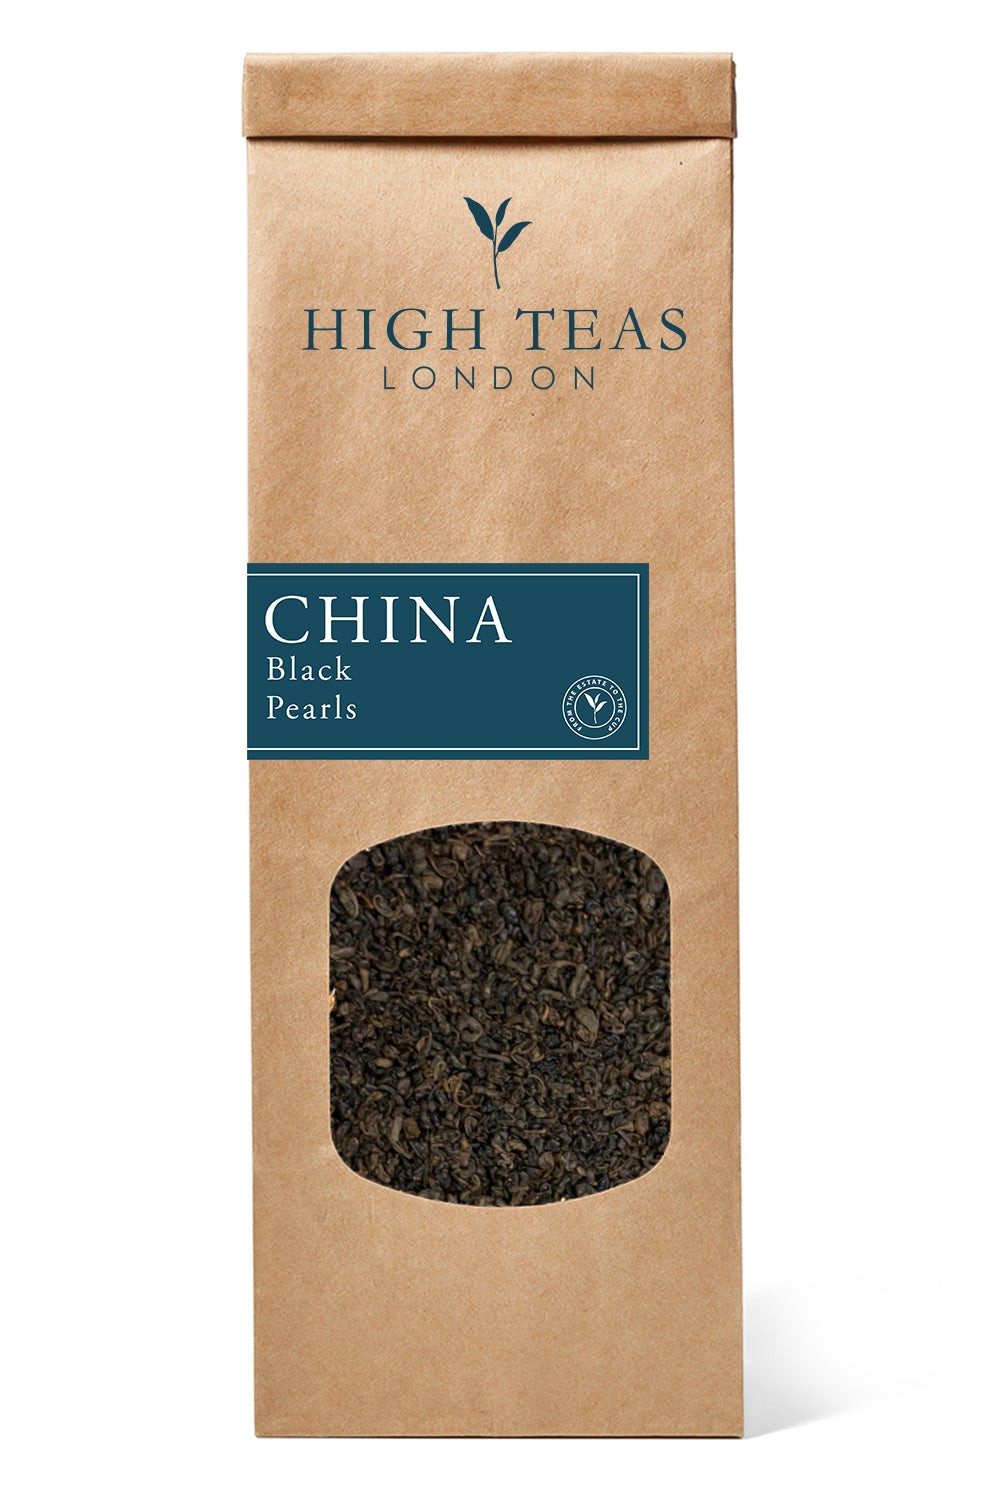 China - Black Pearls aka Black Gunpowder-50g-Loose Leaf Tea-High Teas